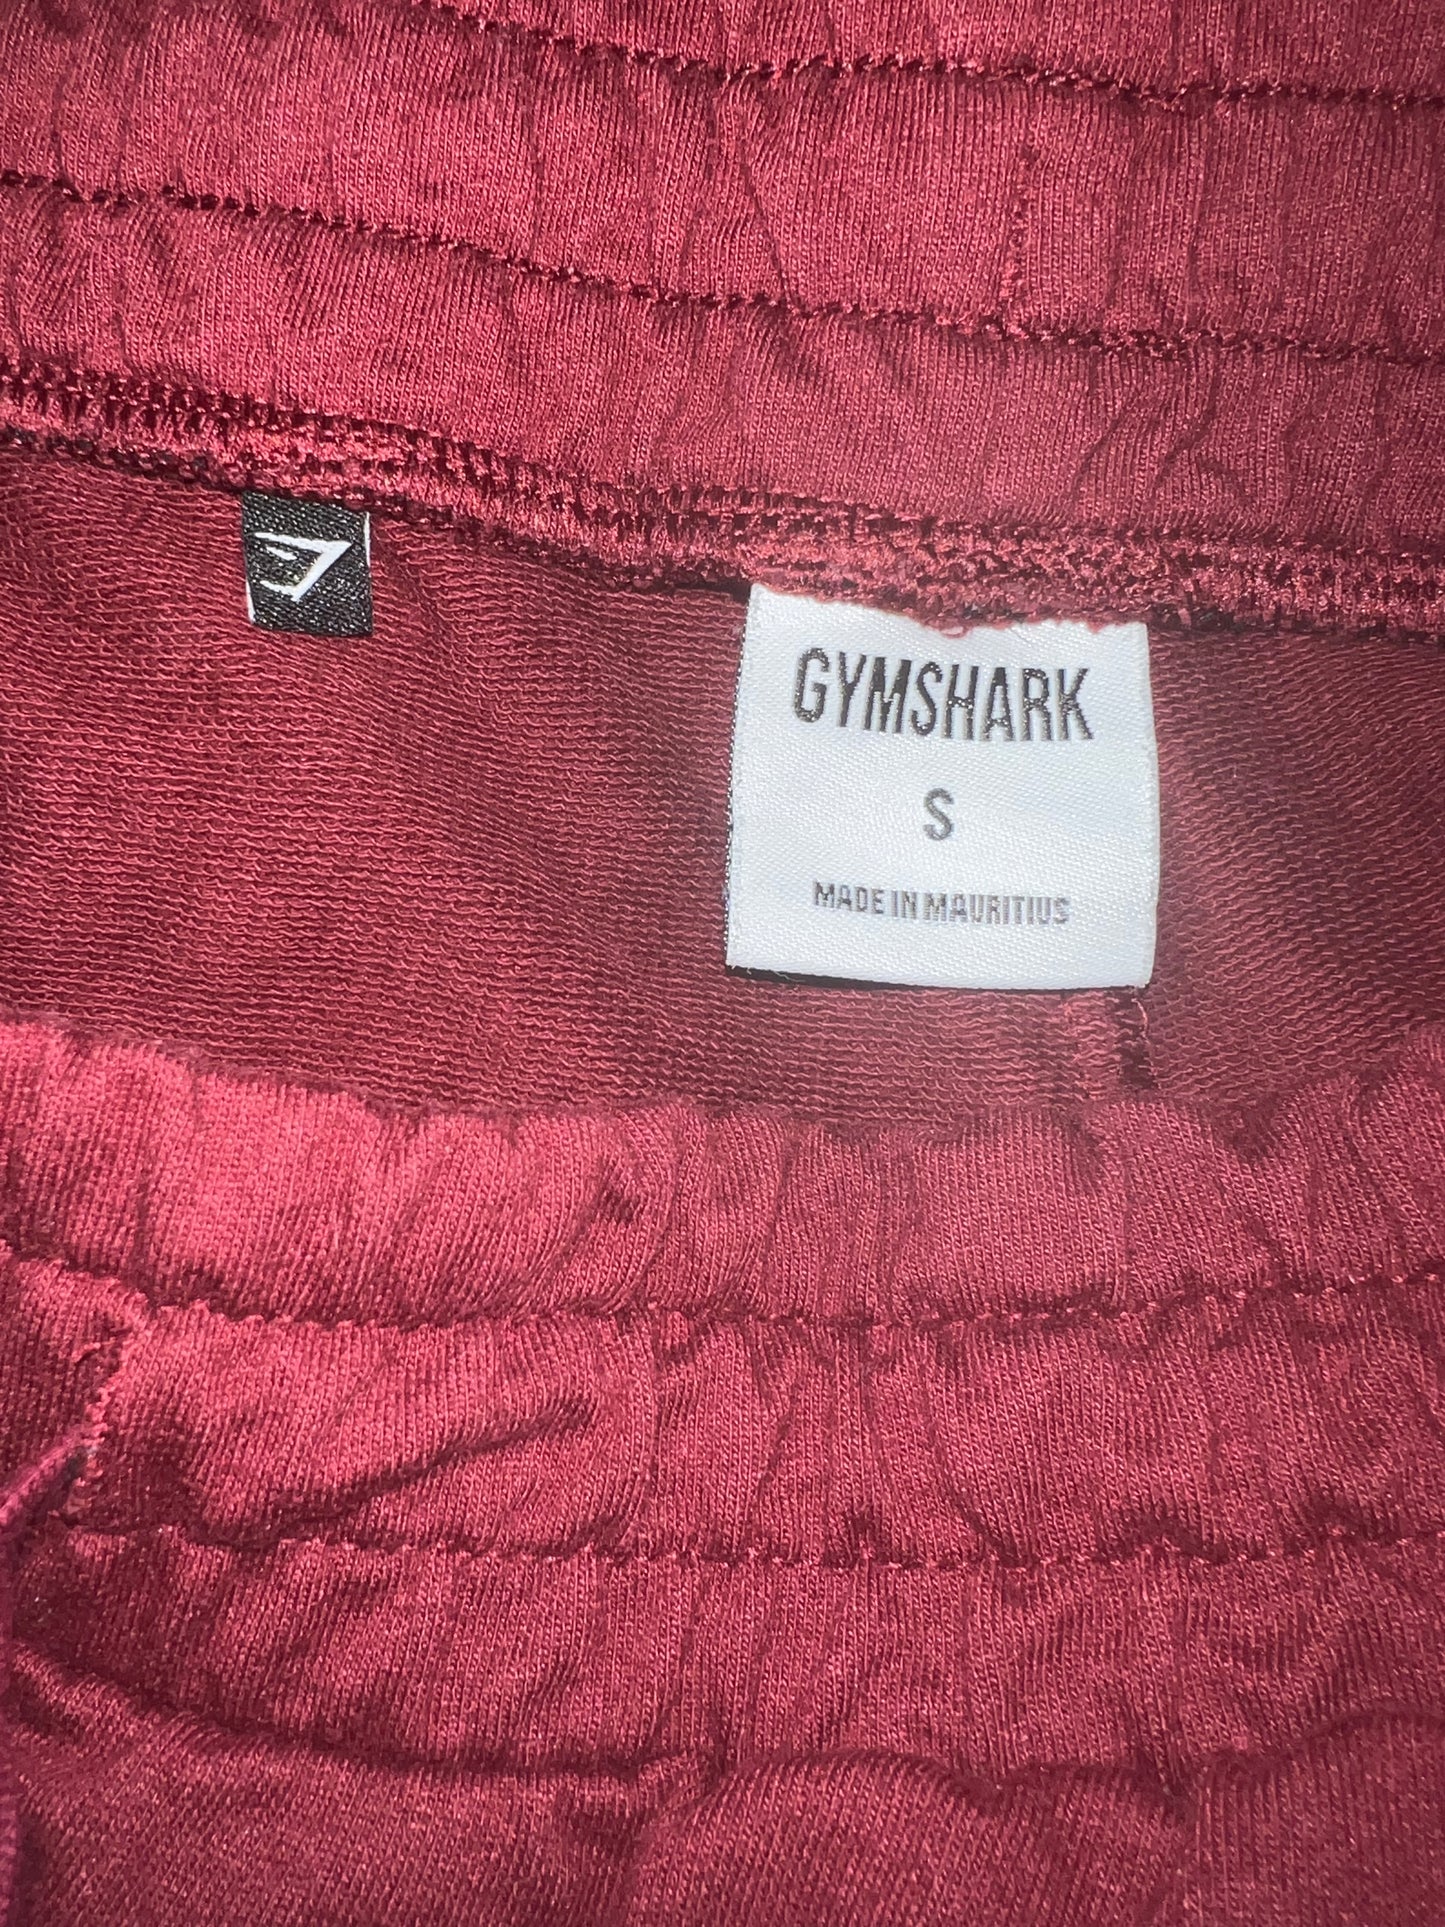 Gymshark Sweatpants